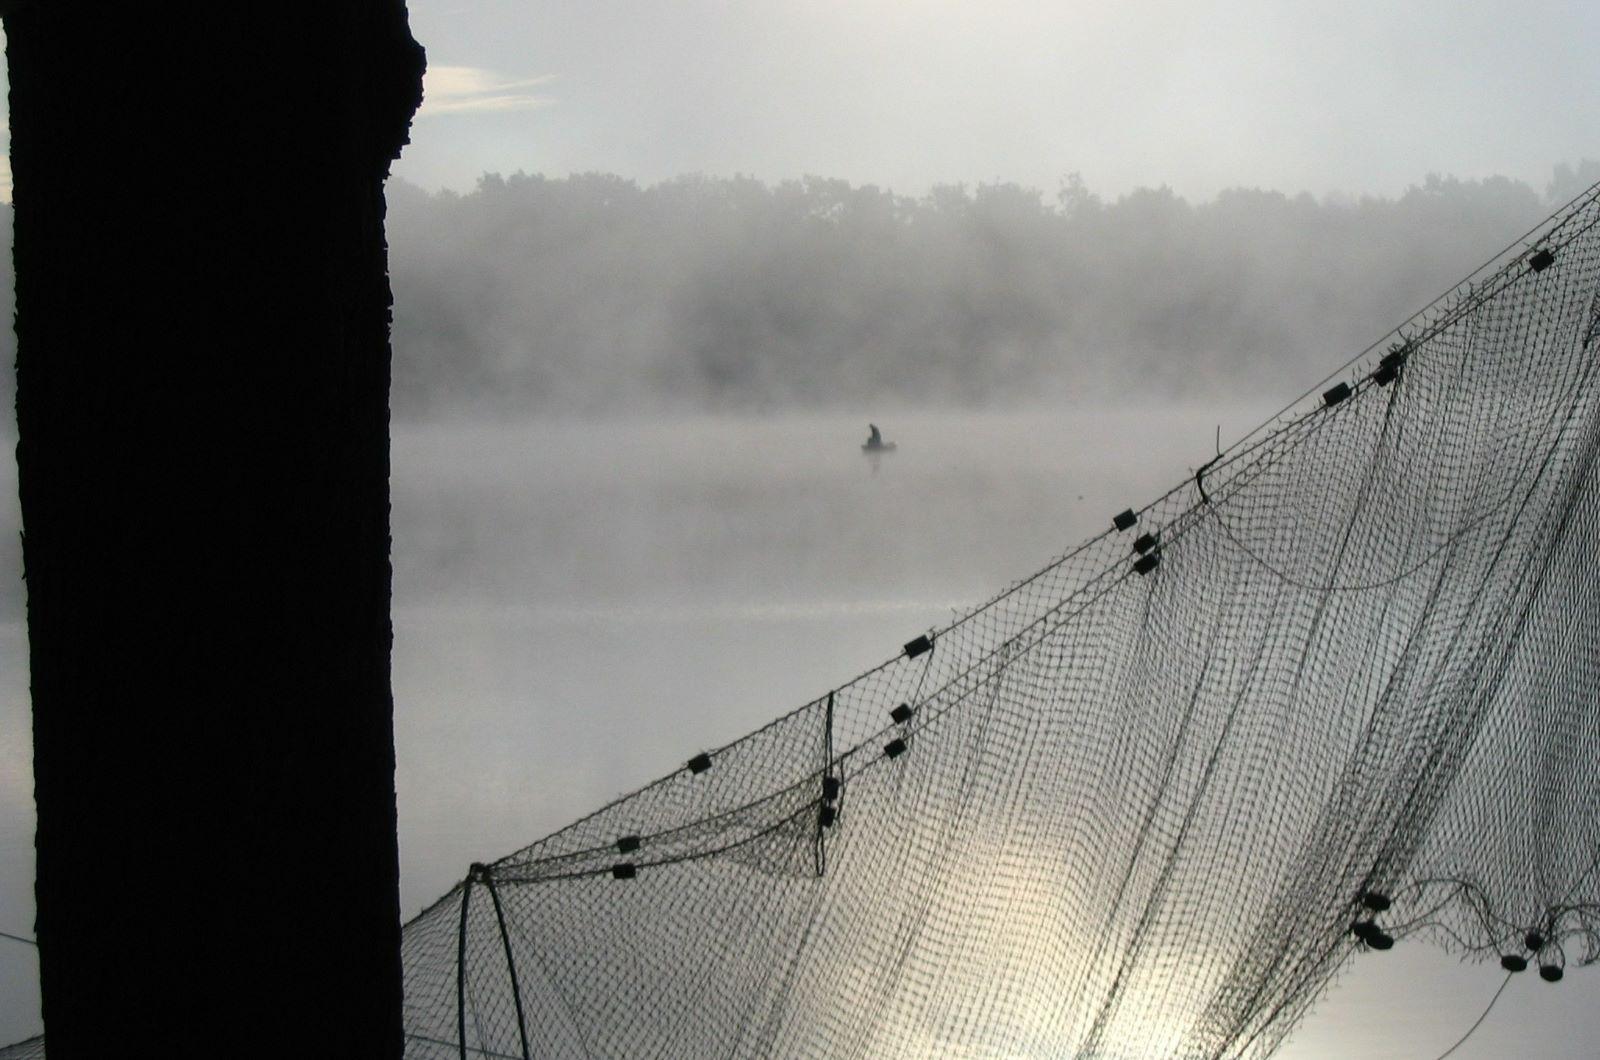 Fishing at misty dawn